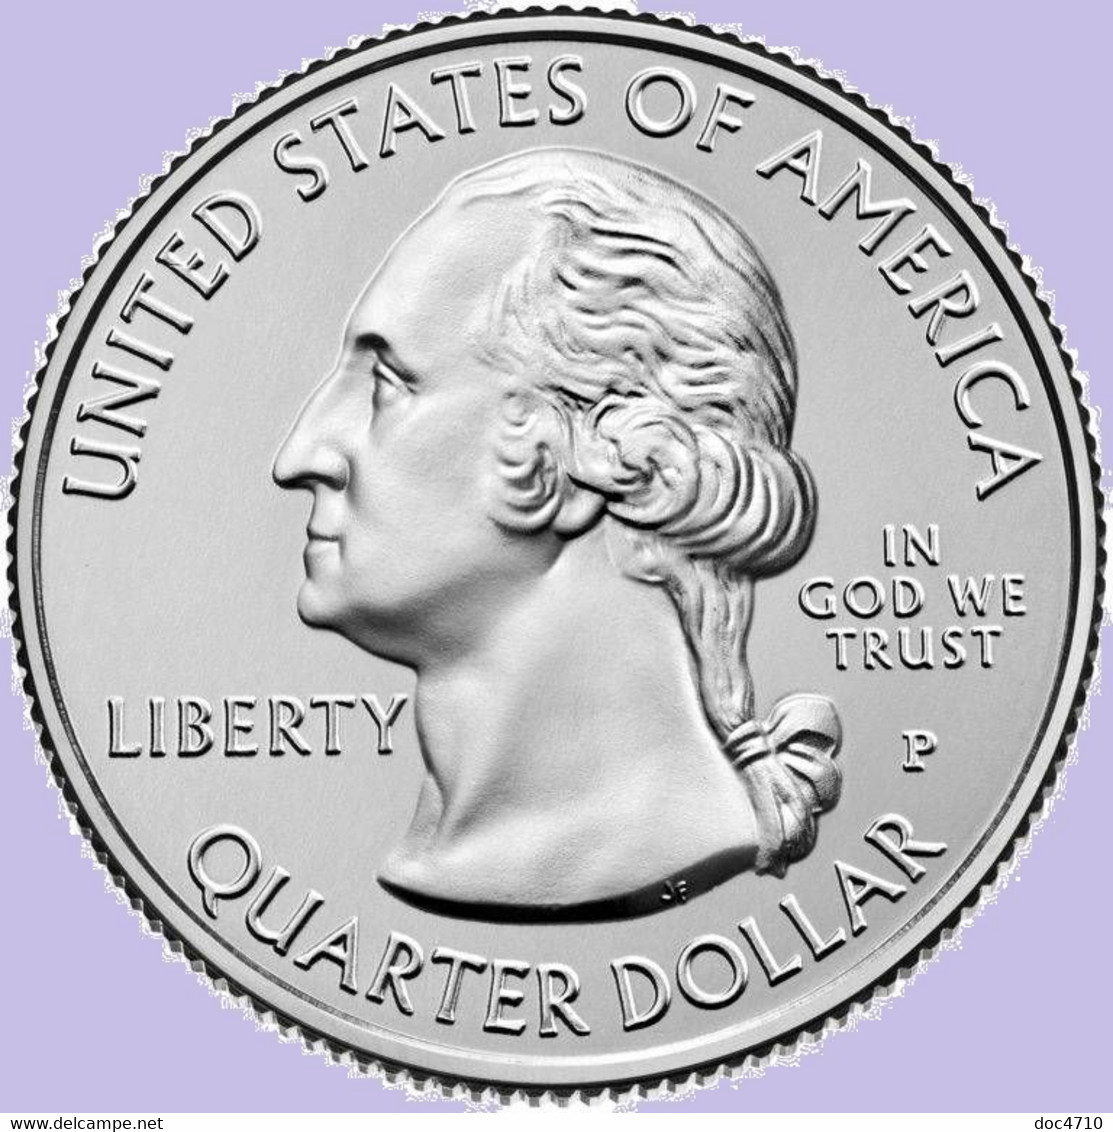 USA Quarter 1/4 Dollar 2019 D, American Memorial Park - Northern Mariana Islands, KM#695, Unc - 2010-...: National Parks